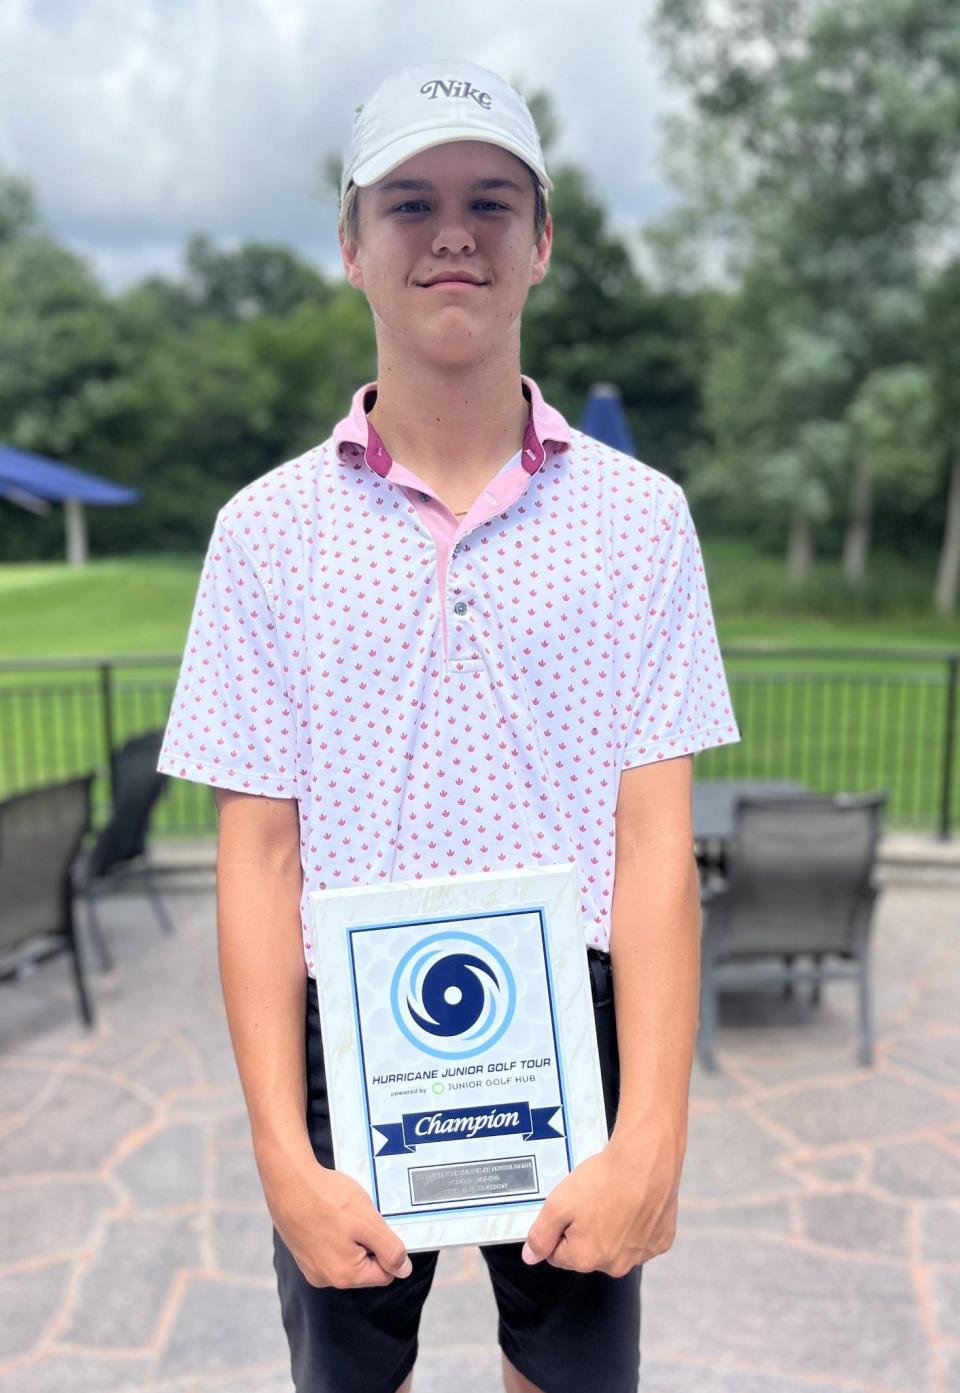 Newark Catholic's Max Vanoy recently won a Hurricane Junior Golf Tour championship.